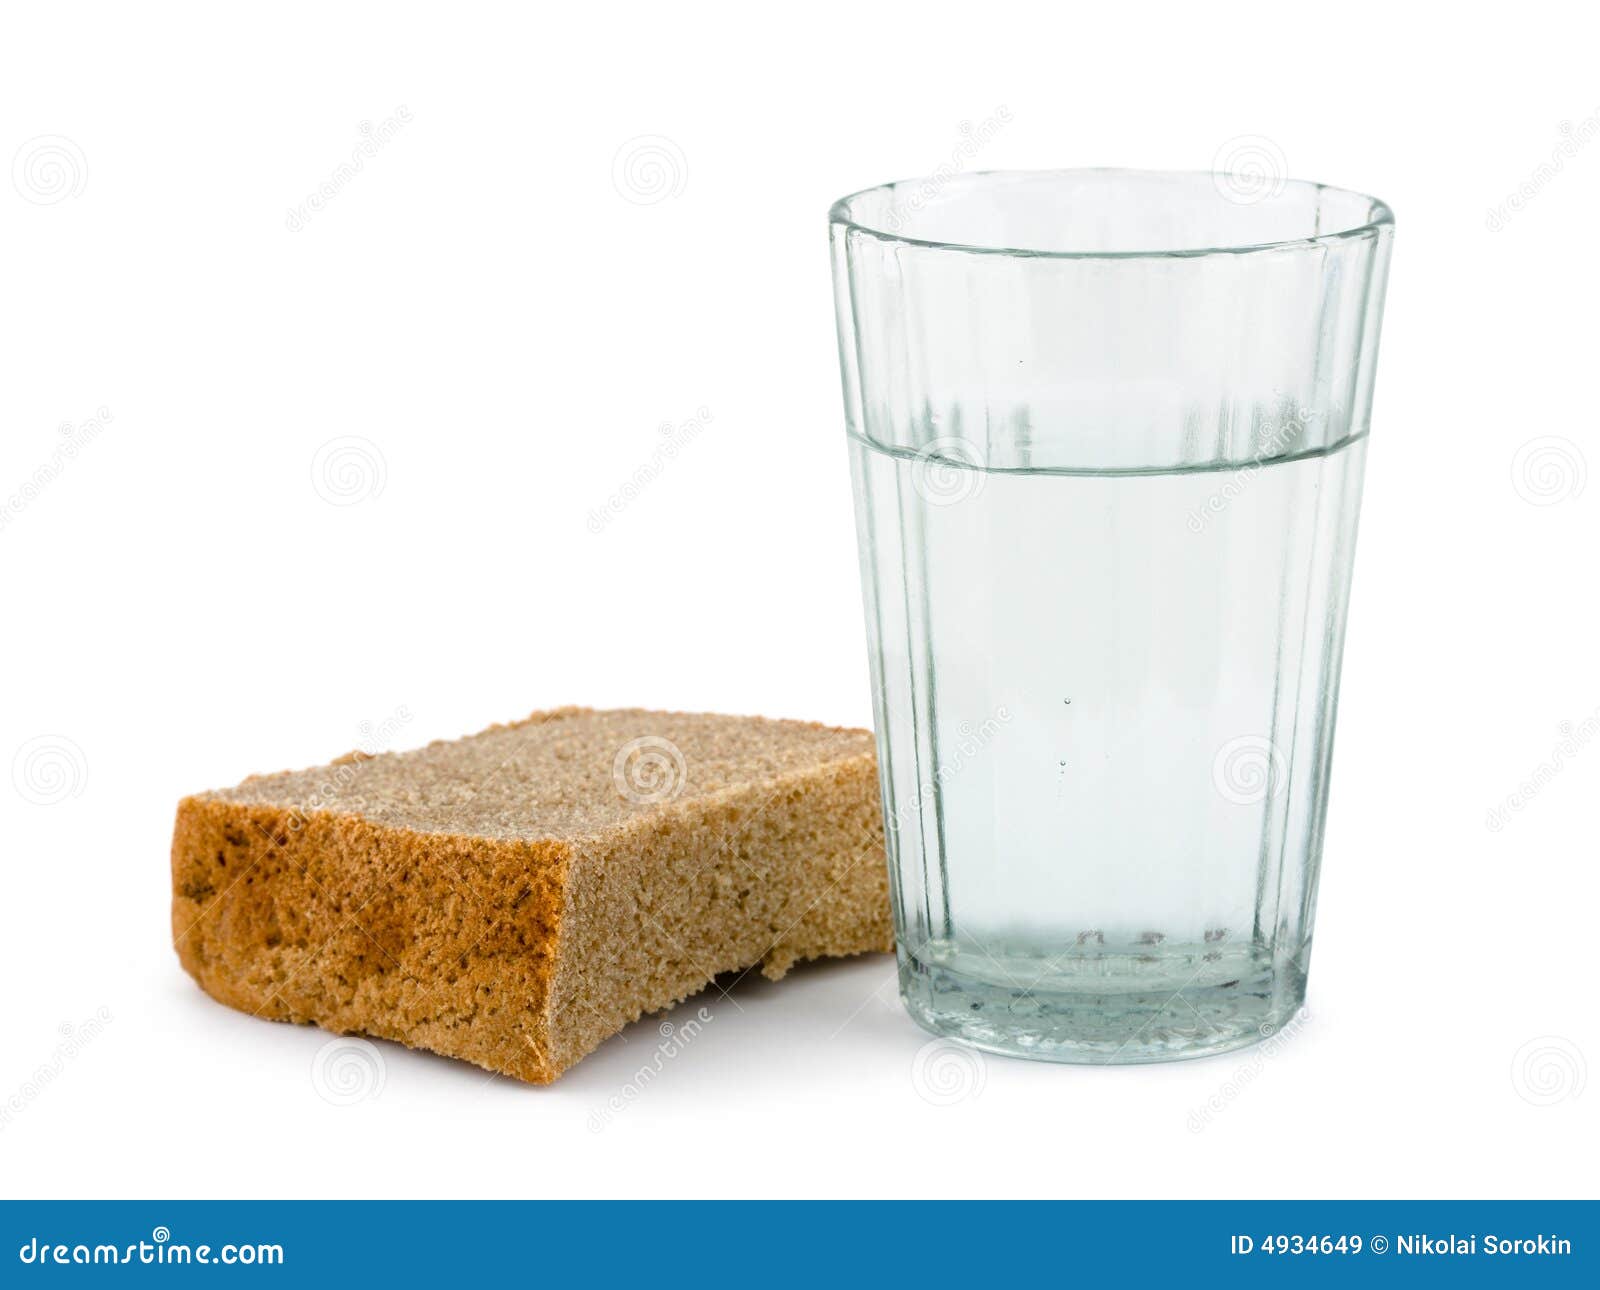 Ставят стакан воды и хлеб. Стопка с хлебом. Стакан воды с хлебом. Рюмка с хлебом.